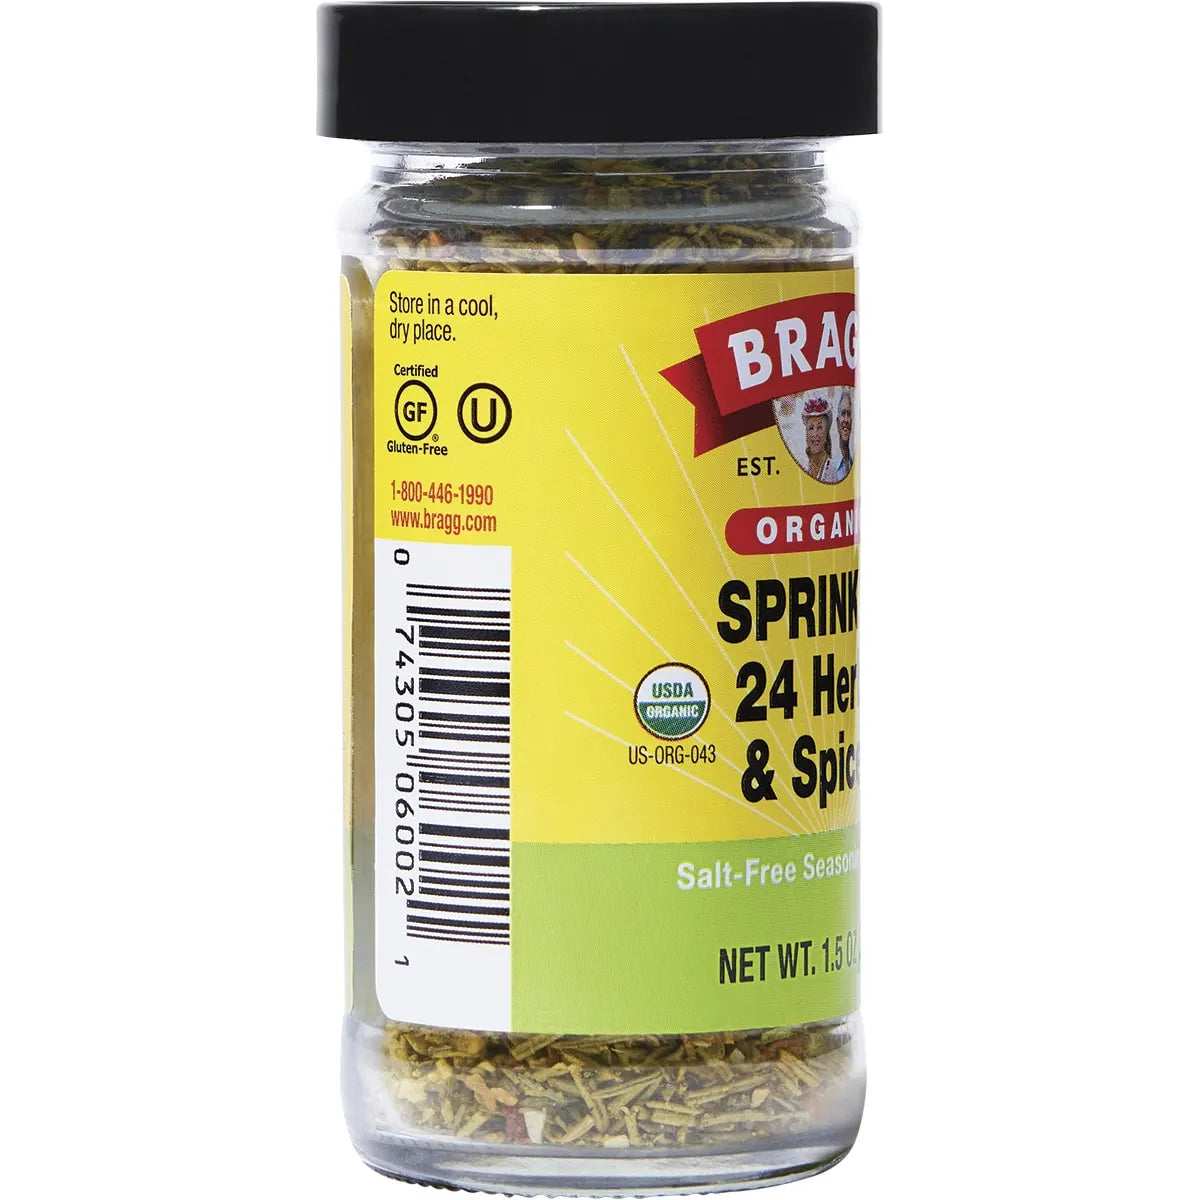 Bragg Seasoning Organic Sprinkle 24 Herb & Spices Salt-Free